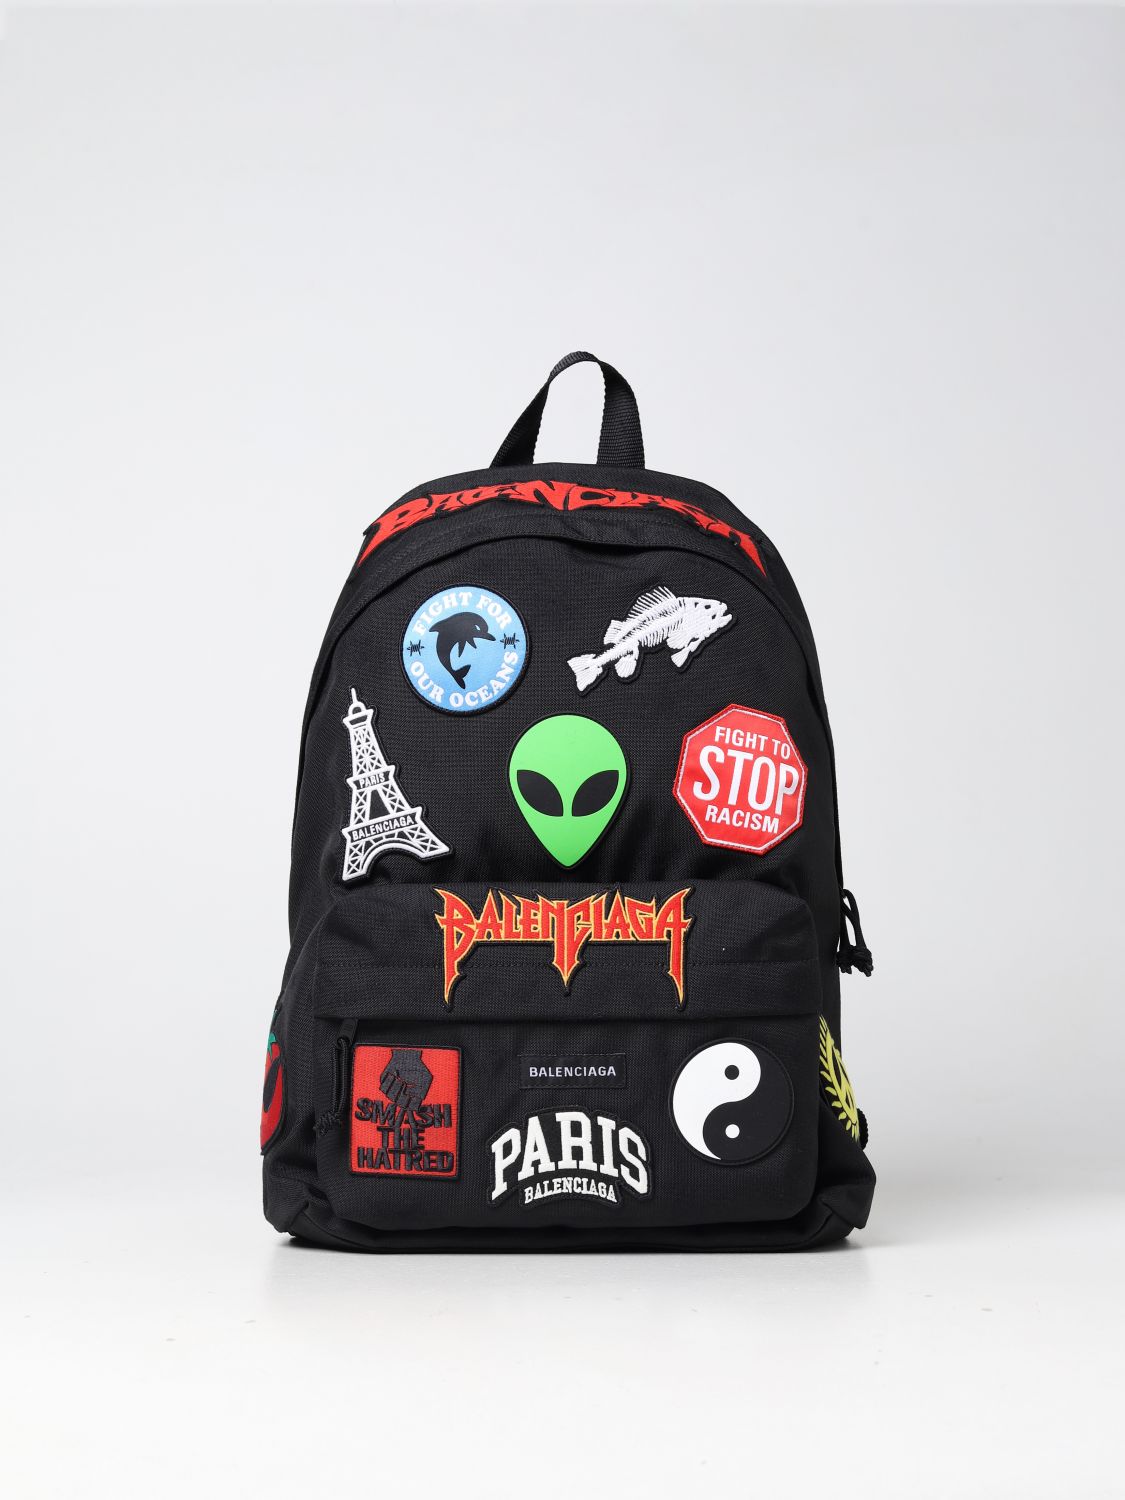 BALENCIAGA backpack for man  Black  Balenciaga backpack 5032212109S  online on GIGLIOCOM